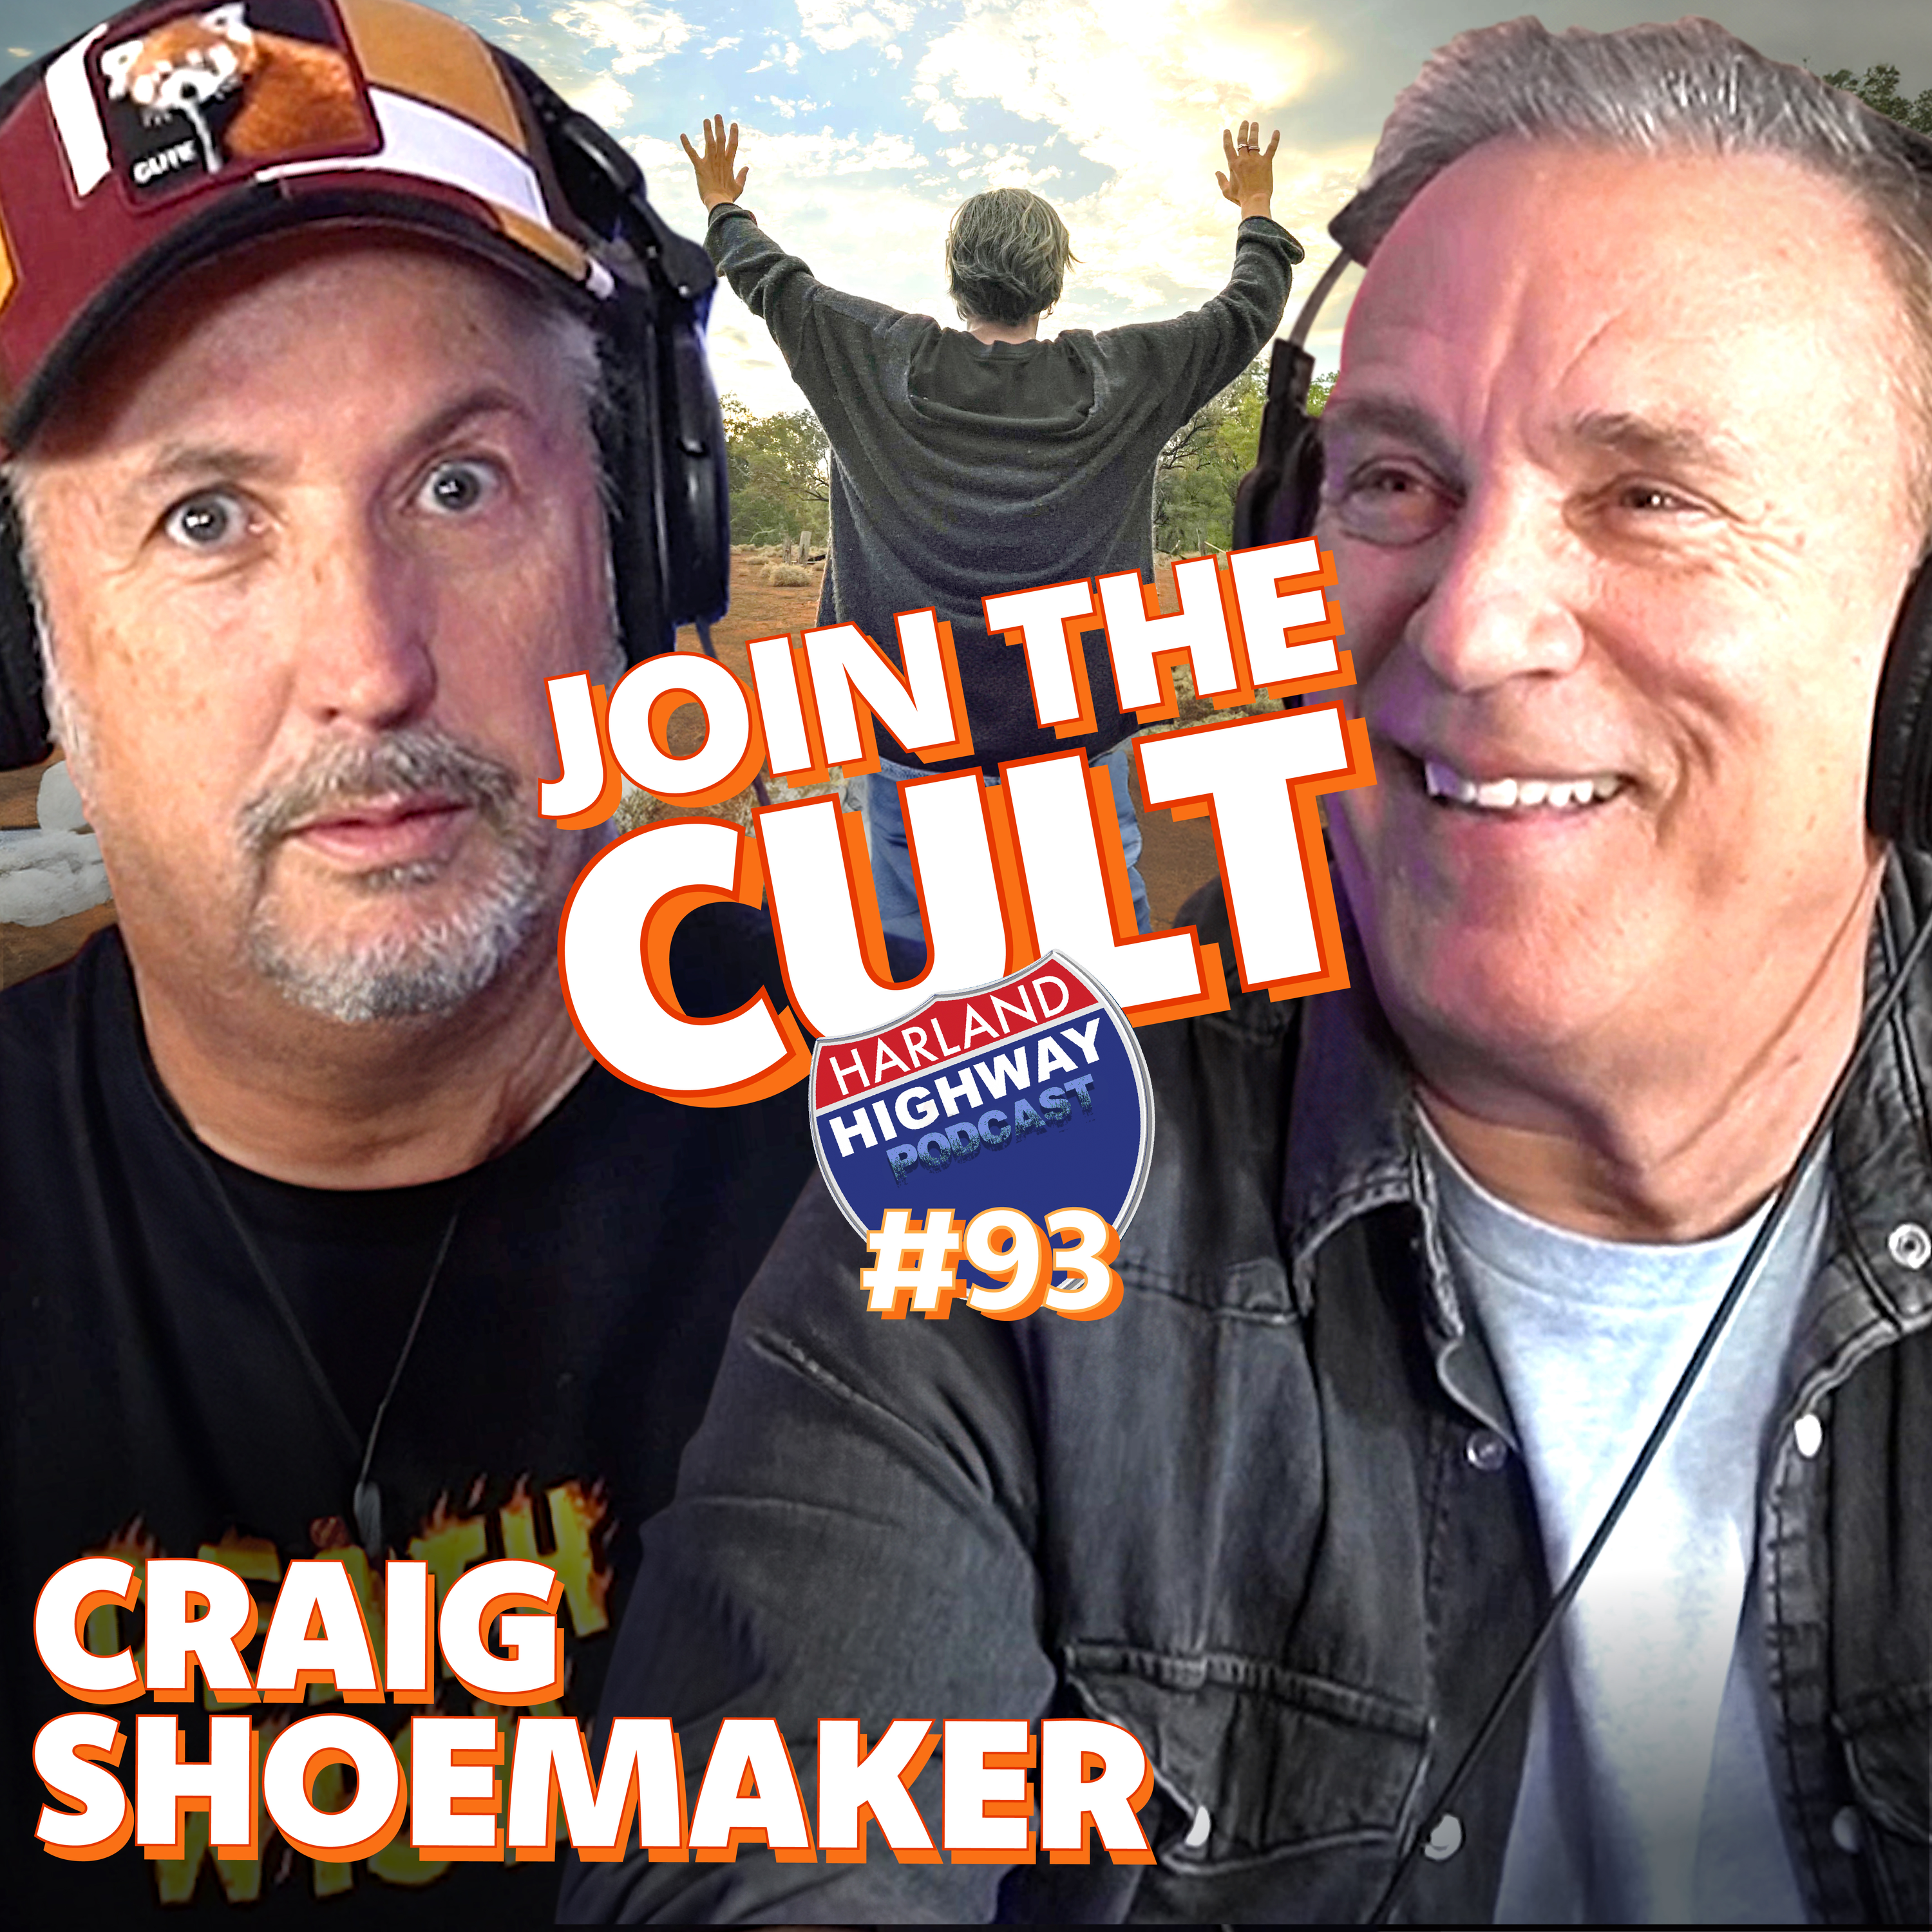 Craig Shoemaker-Comedian and actor and Cult escapee!